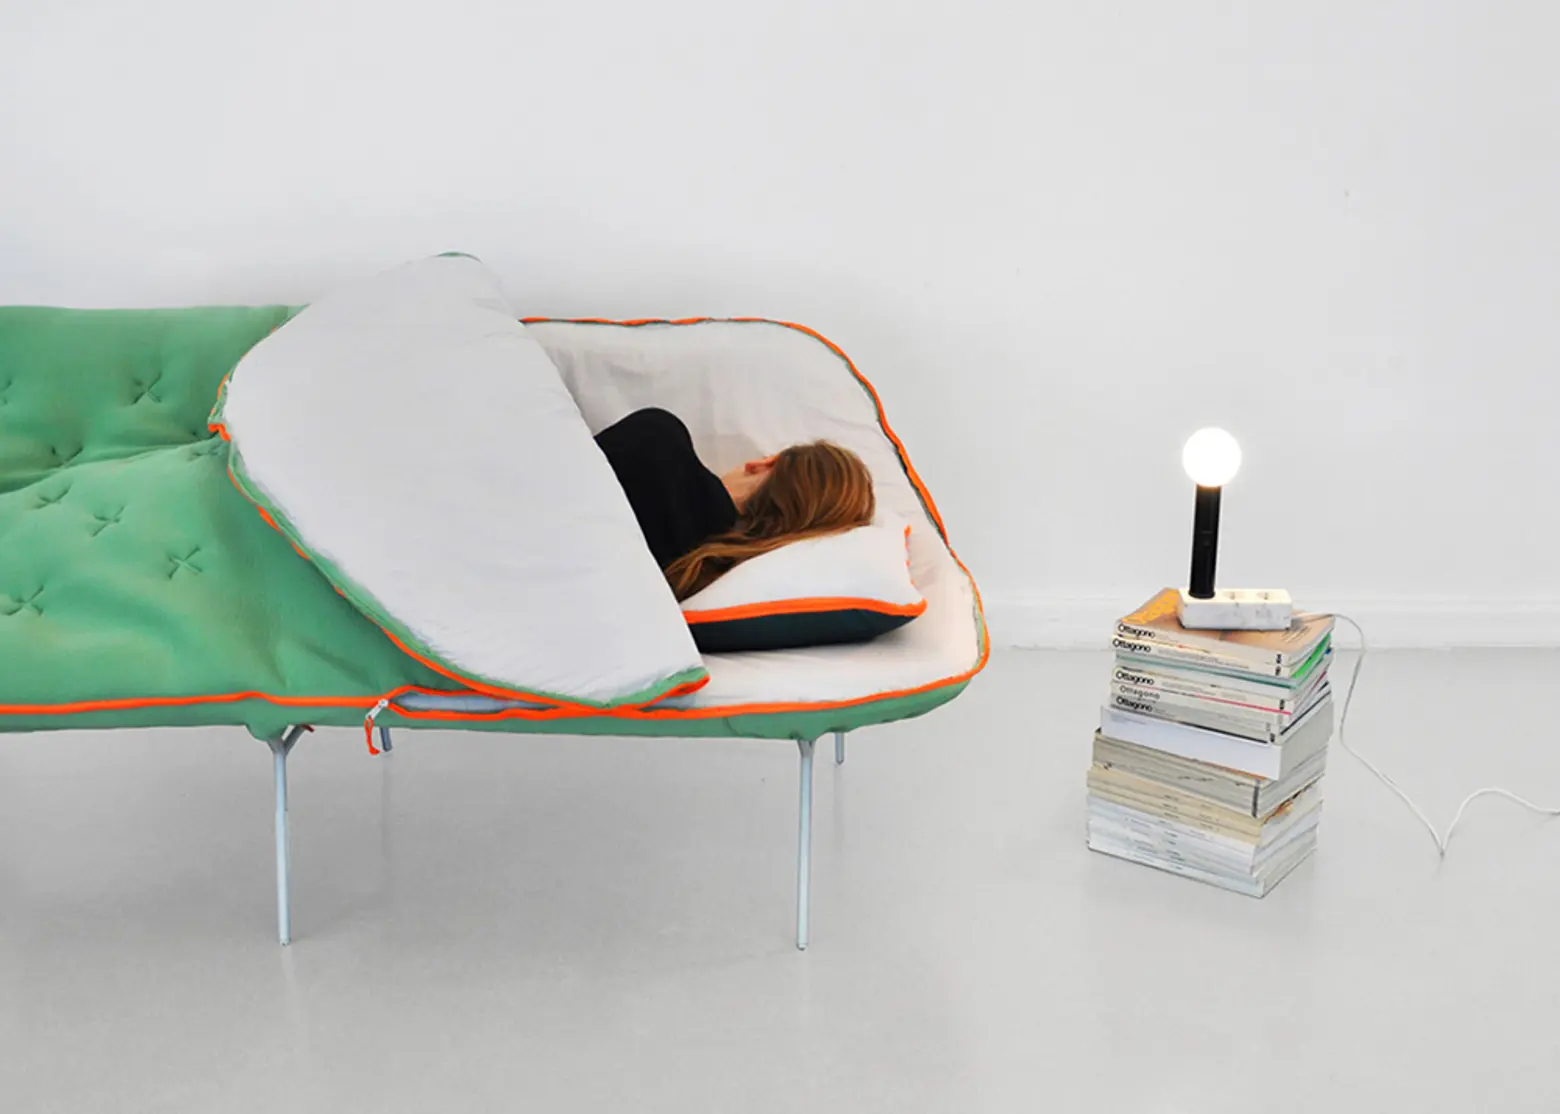 Nomadic Designer Stephanie Hornig’s Camp Daybed Is a Sleeping Bag on Legs